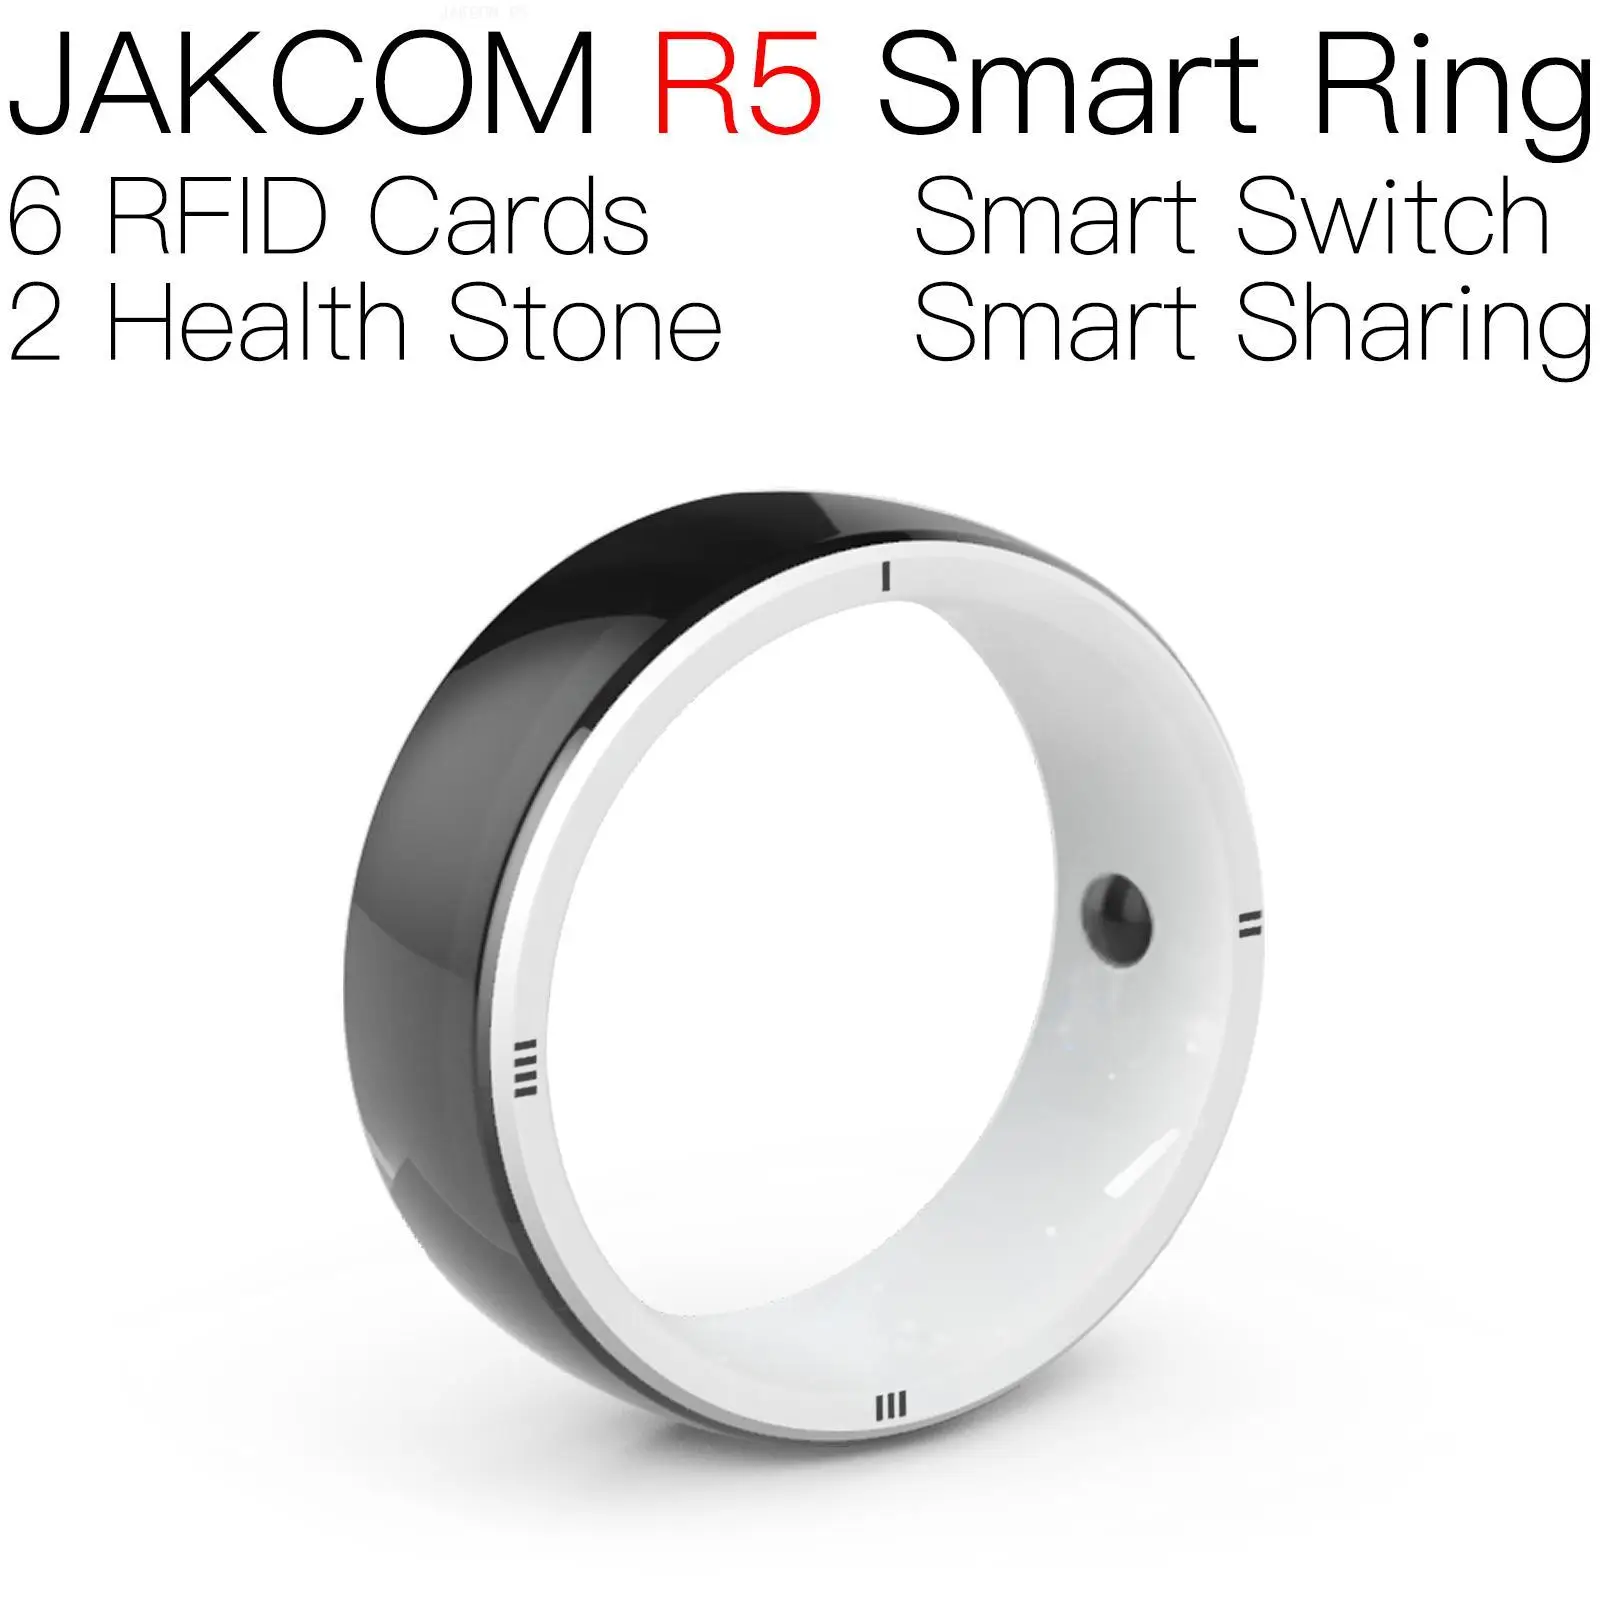 

JAKCOM R5 Smart Ring Super value than rfid 125khz writable rewritable t5577 keyfobs proximity access tags fdc chip attache tag